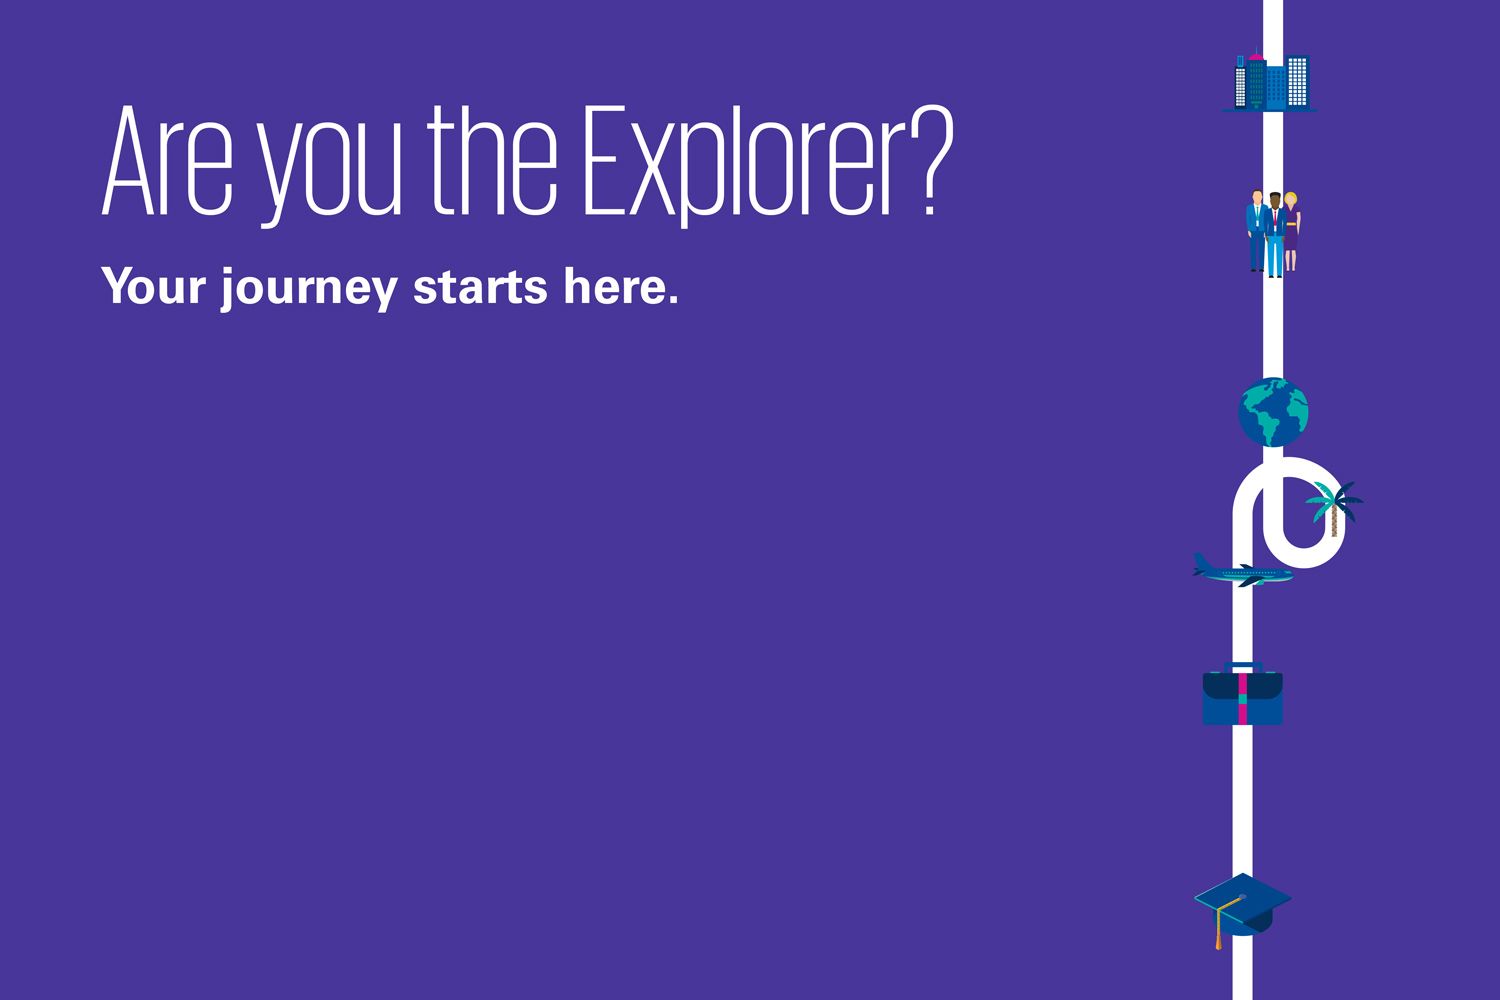 Grad recruitment: Are you the explorer?